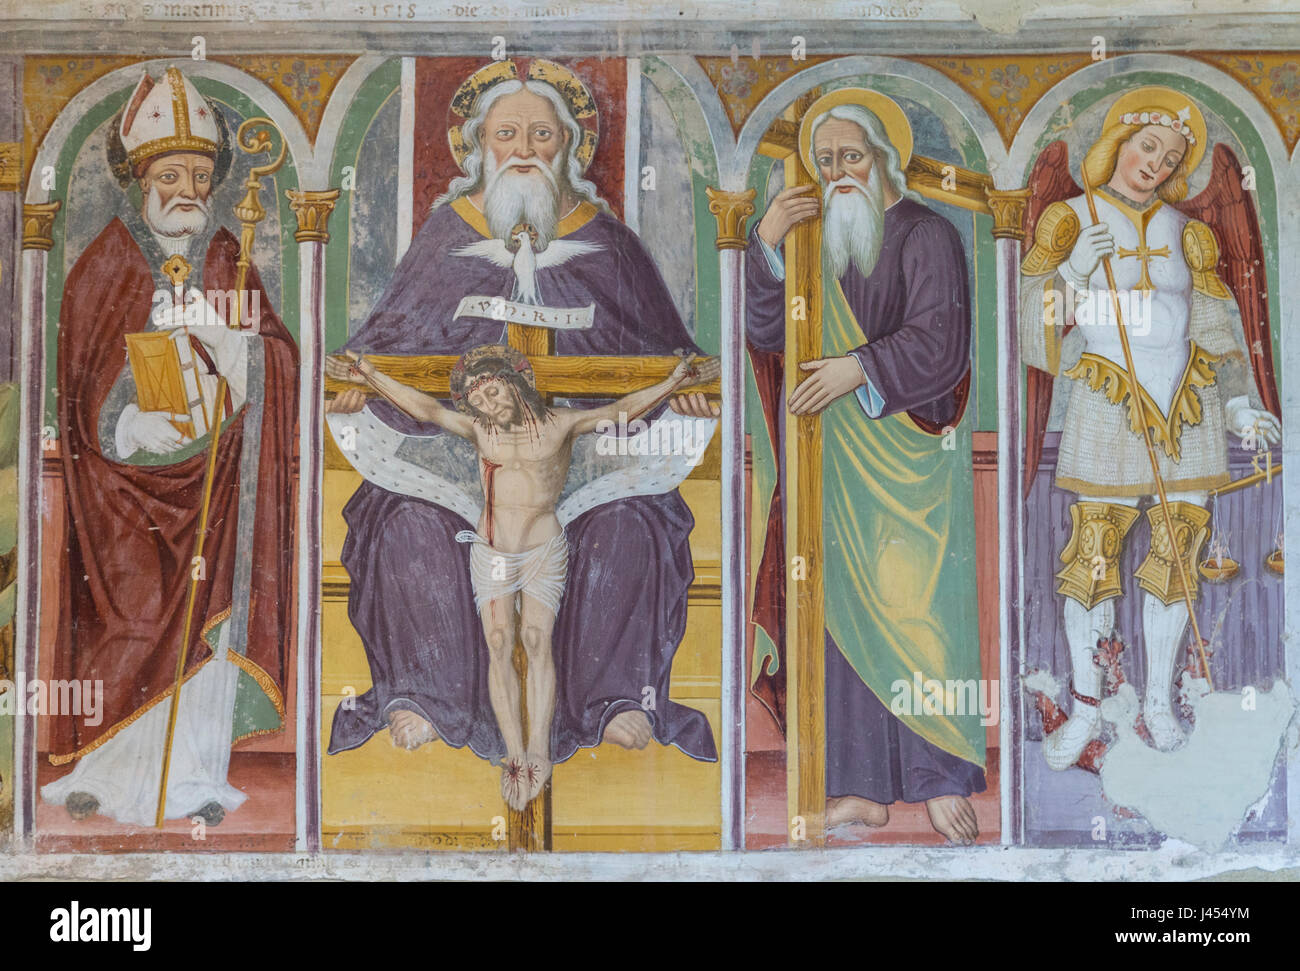 Die wunderschöne Gemälde und Fresken des Santuario della Santissima Trinità in Casnigo, Val Seriana, Provinz Bergamo, Lombardei, Italien. Stockfoto